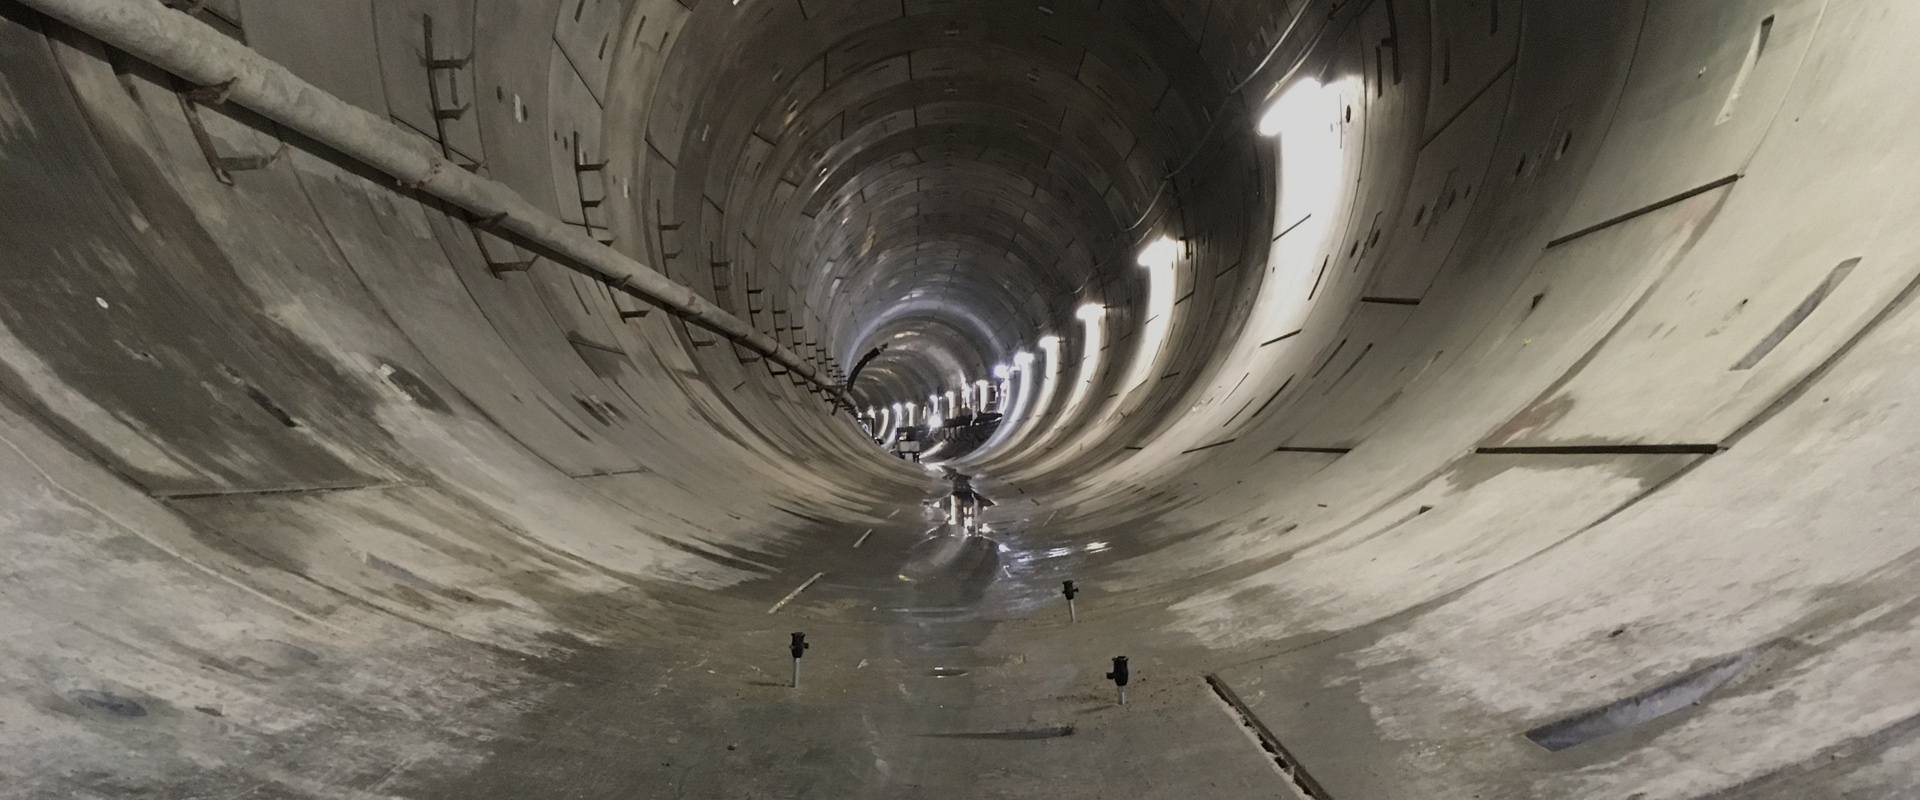 Sydhavn/M4 tunnel construction project in Copenhagen